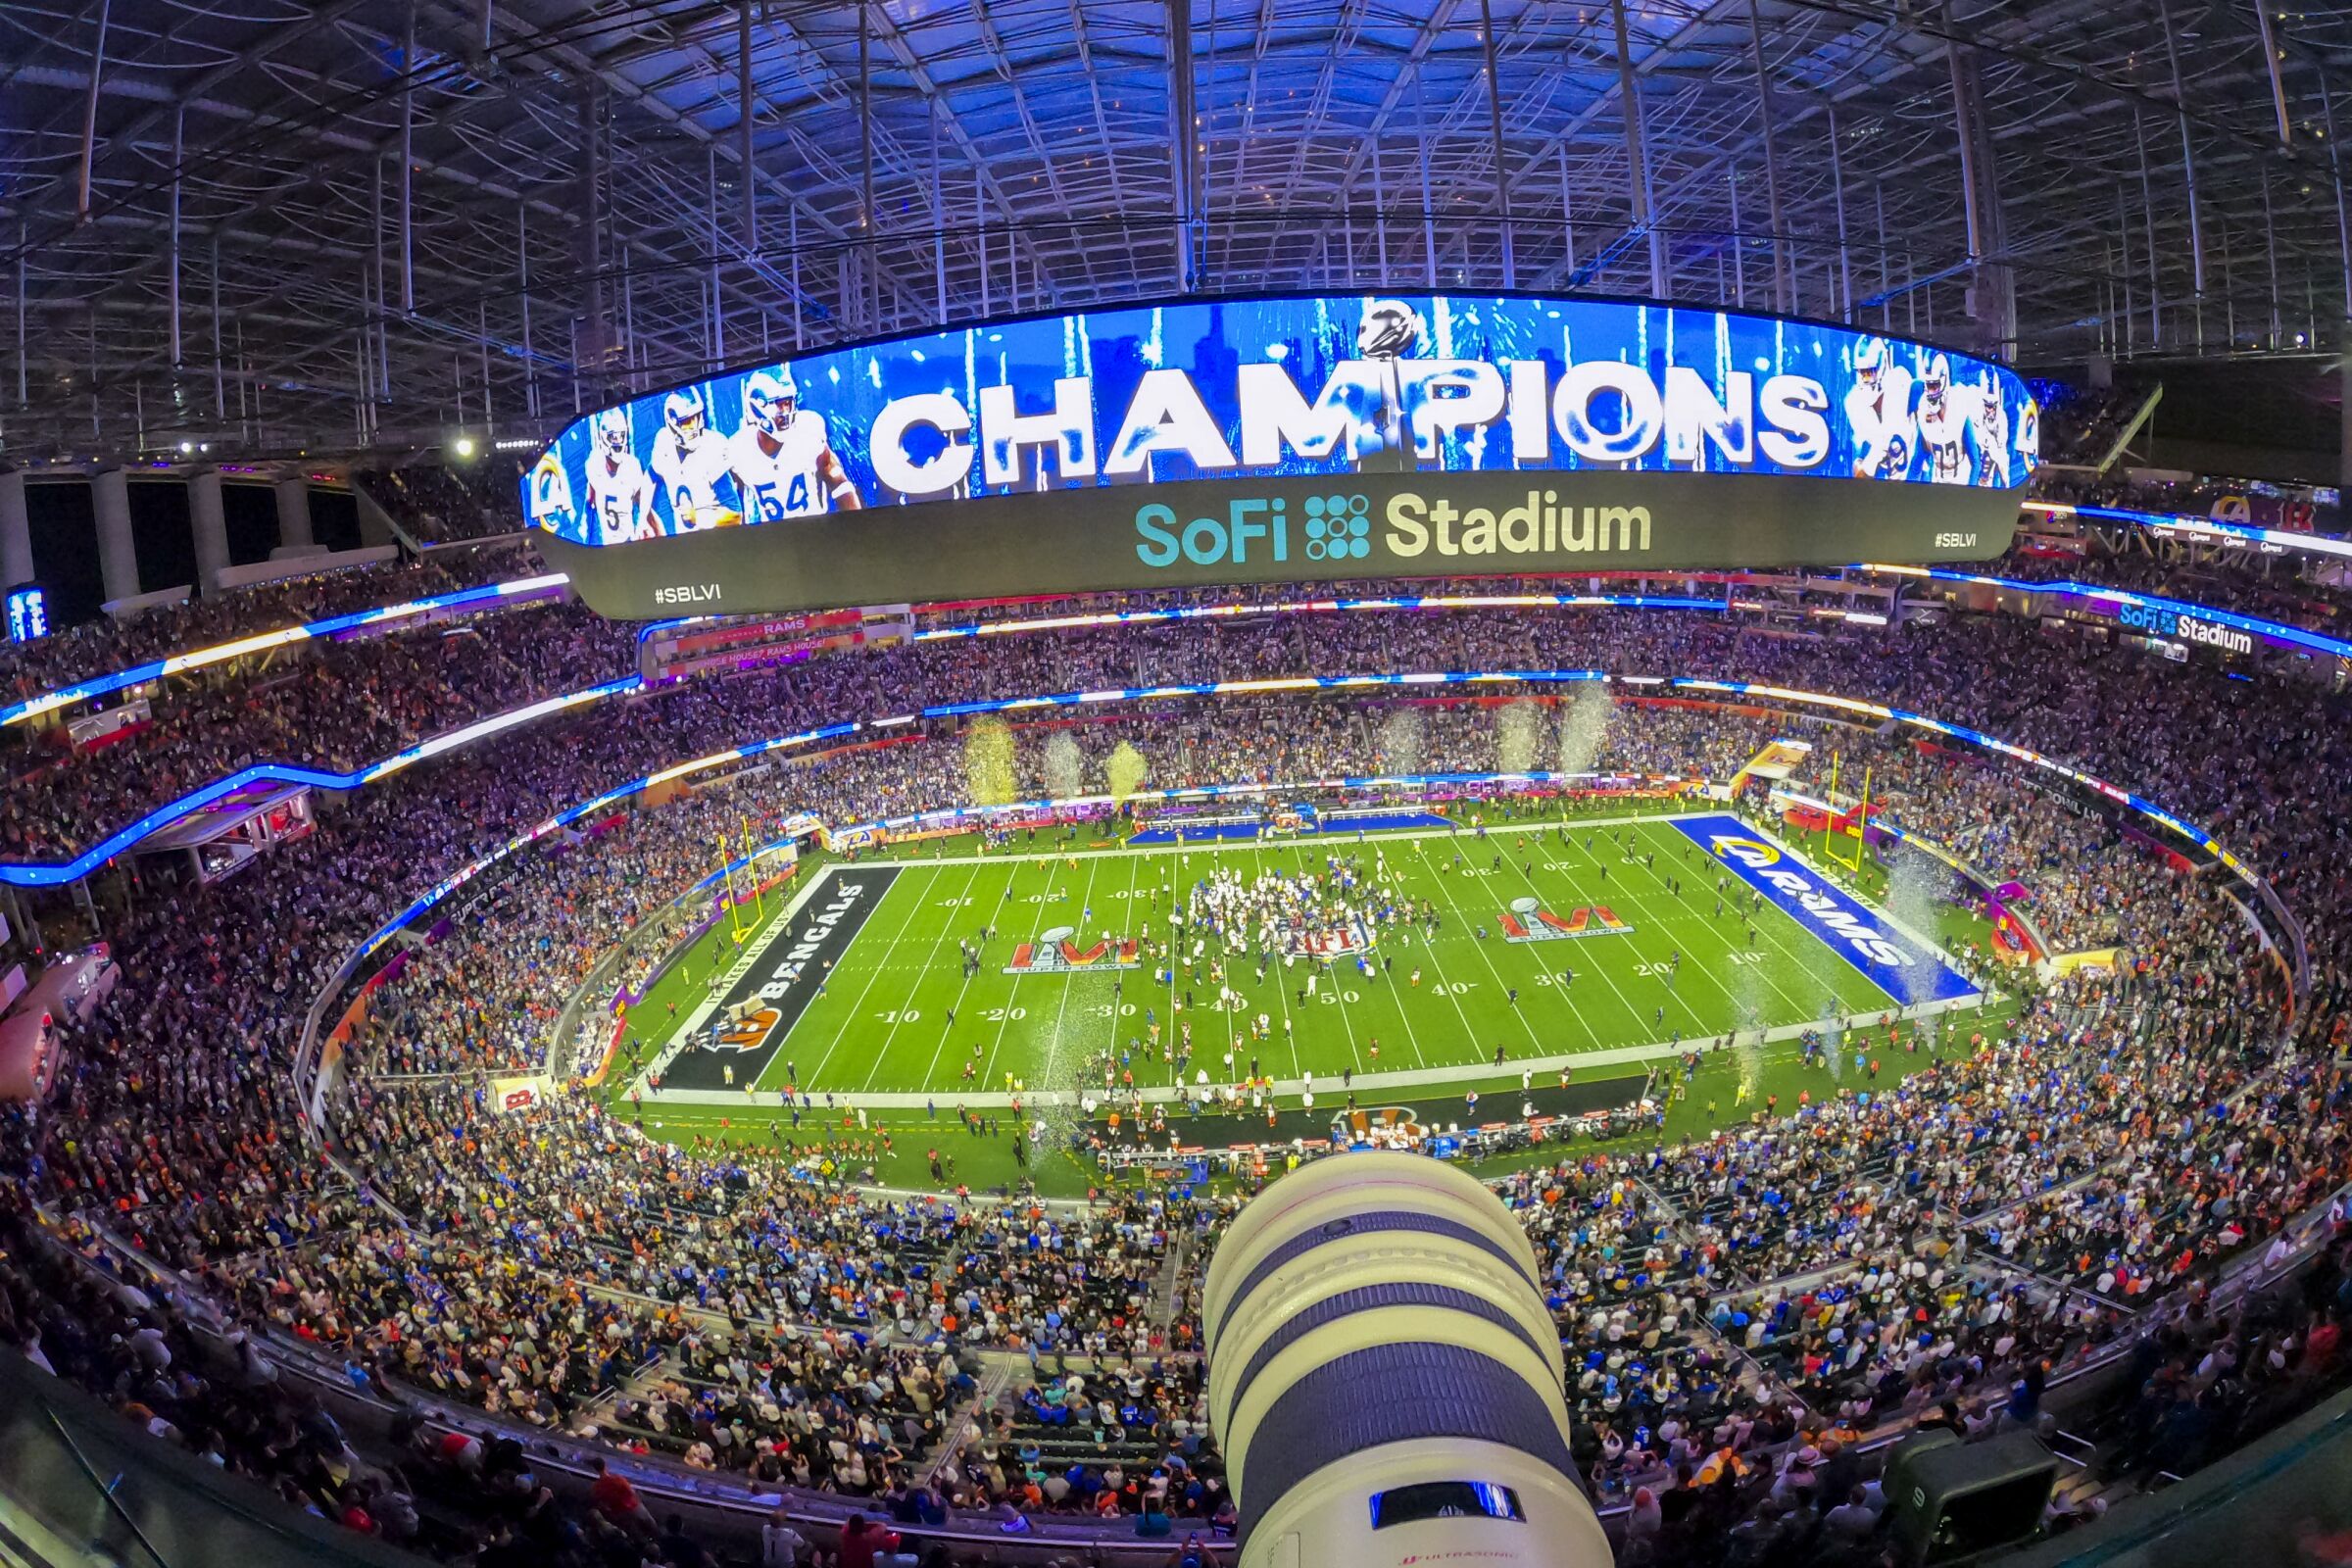 SoFi Stadium played host to Super Bowl LVI between the Rams and Cincinnati Bengals in Feburary 2022.